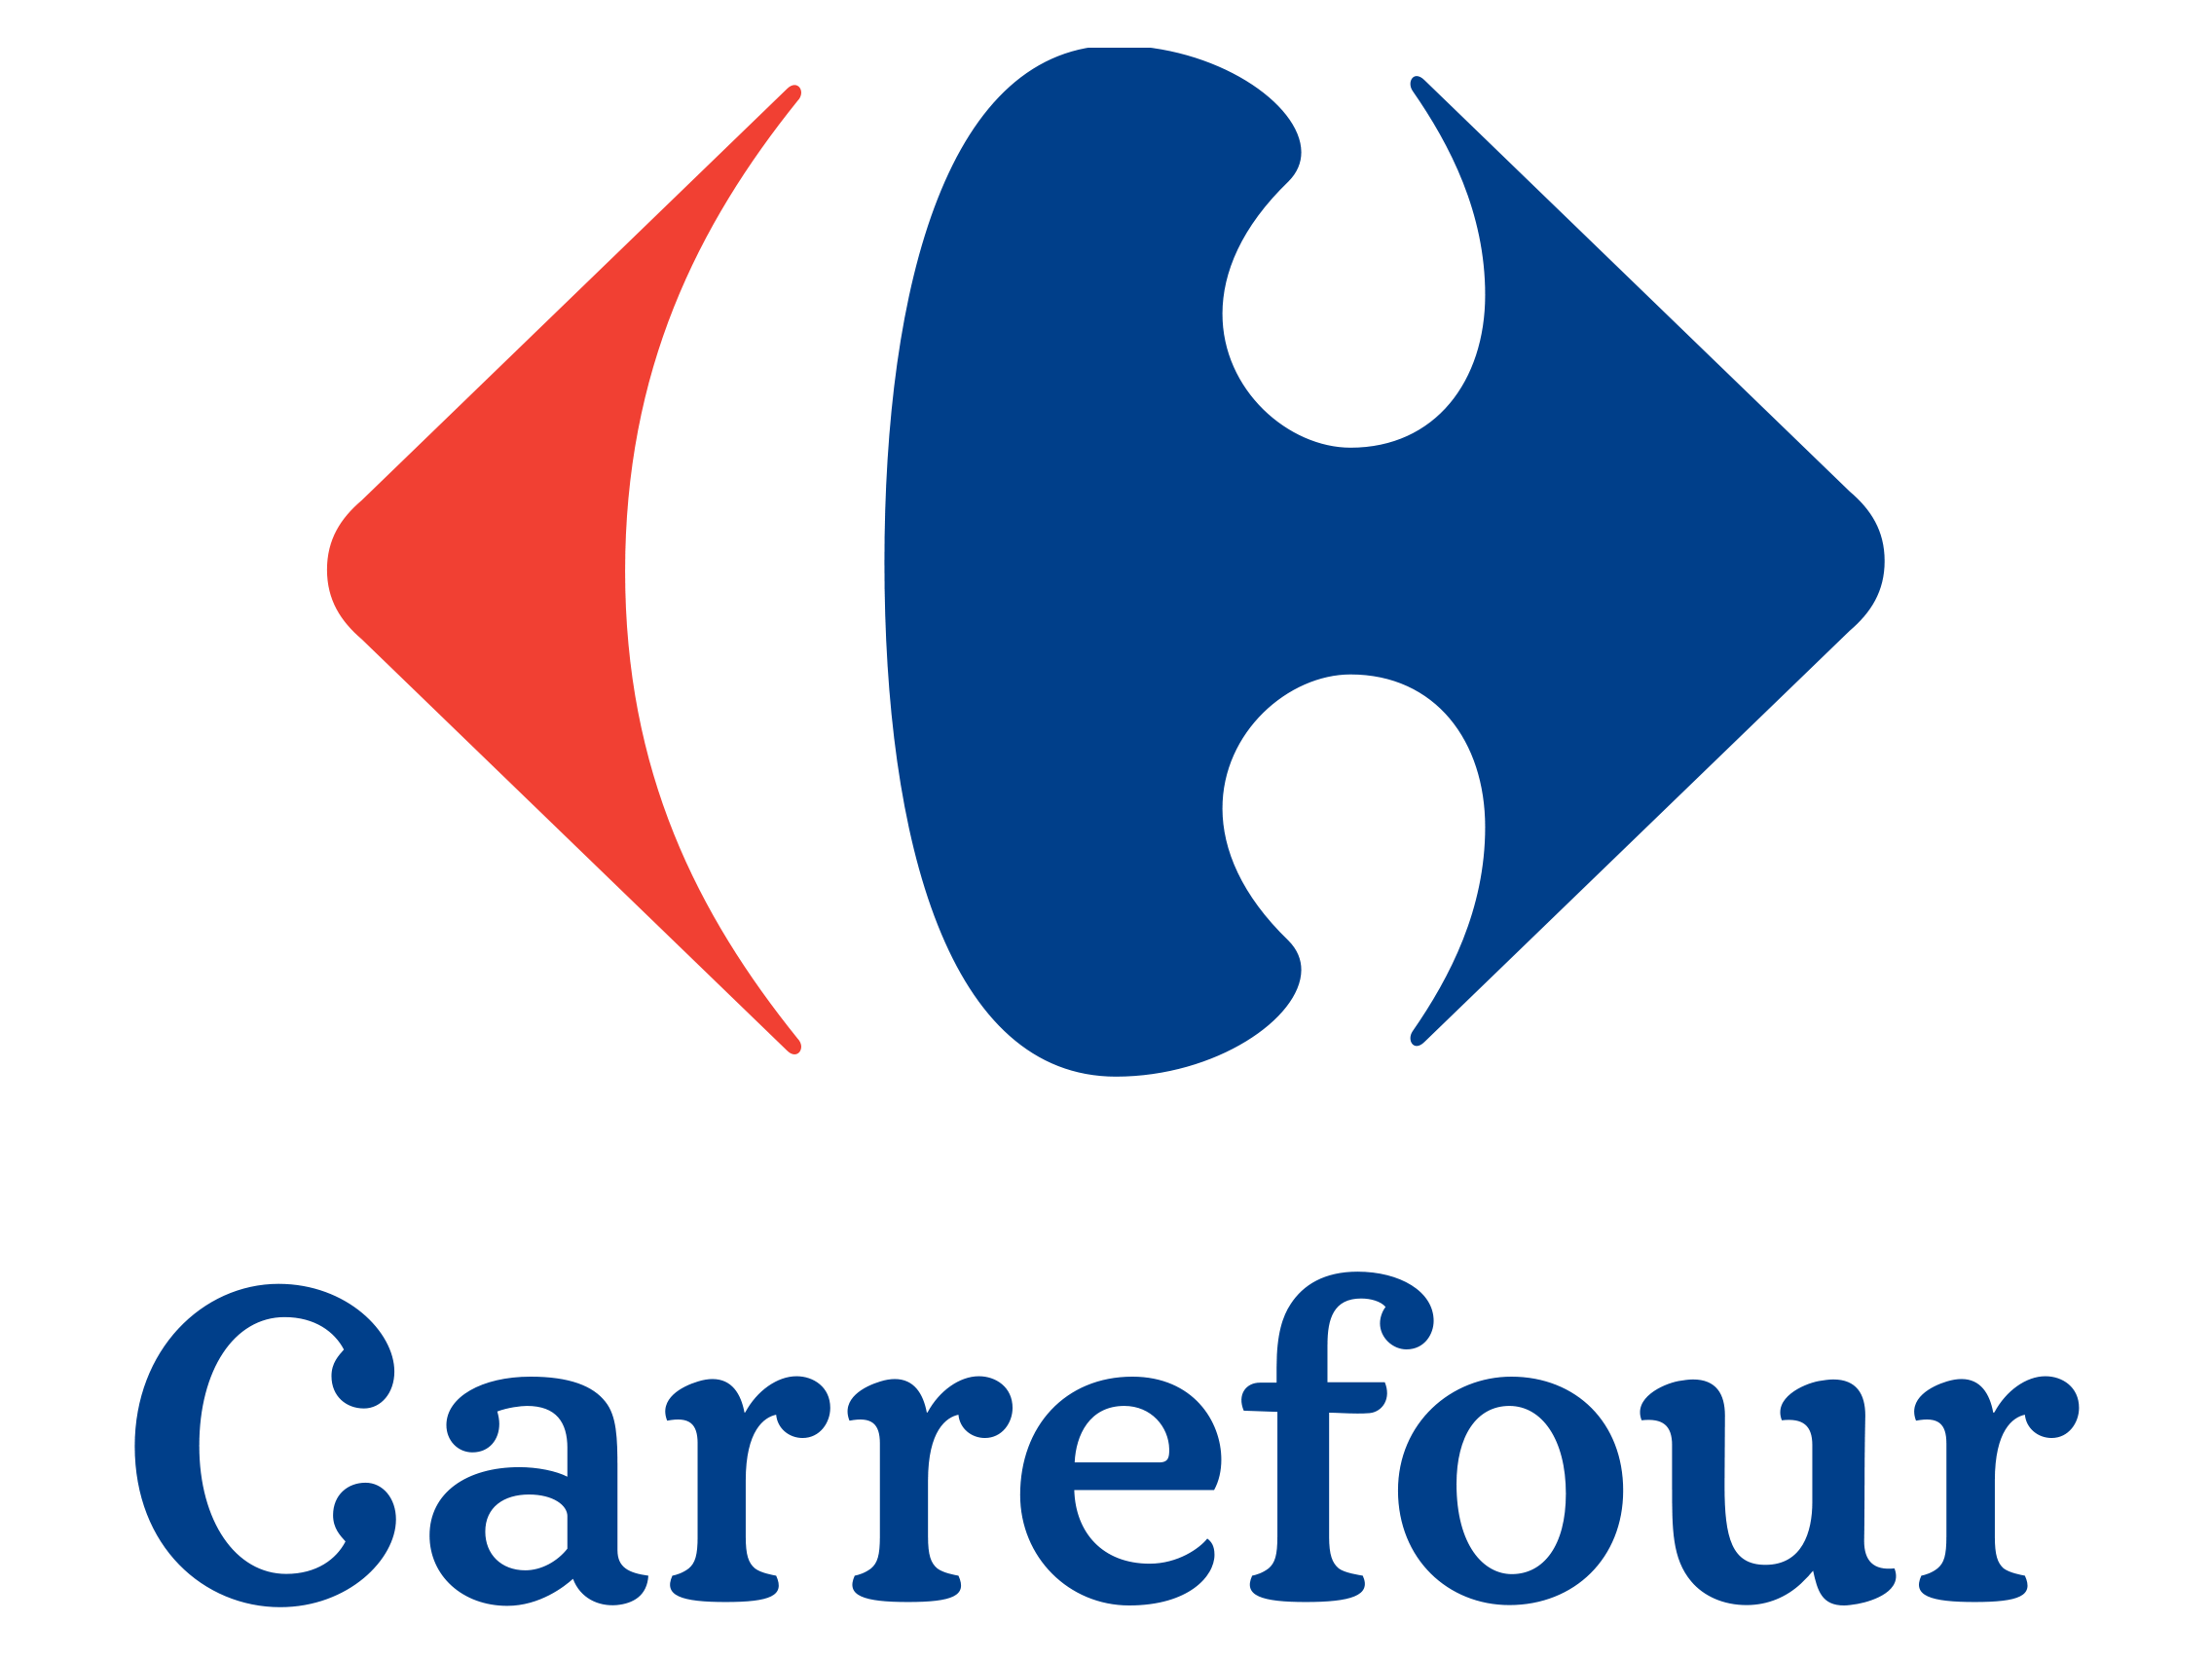 Carrefour – Logos Download